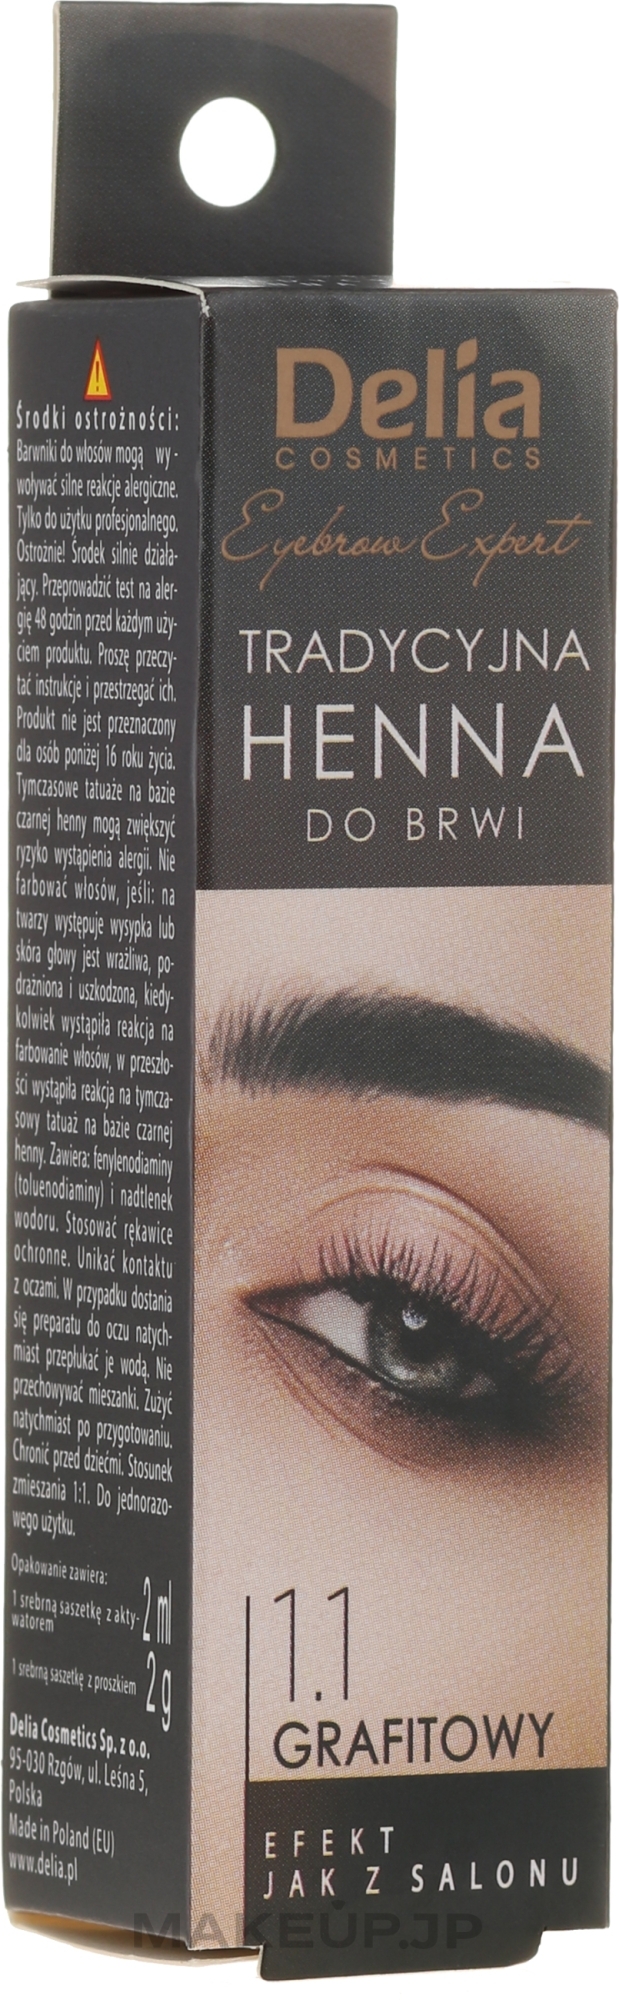 Traditional Brow Henna - Delia Hanna Traditional — photo 1.1 Gray